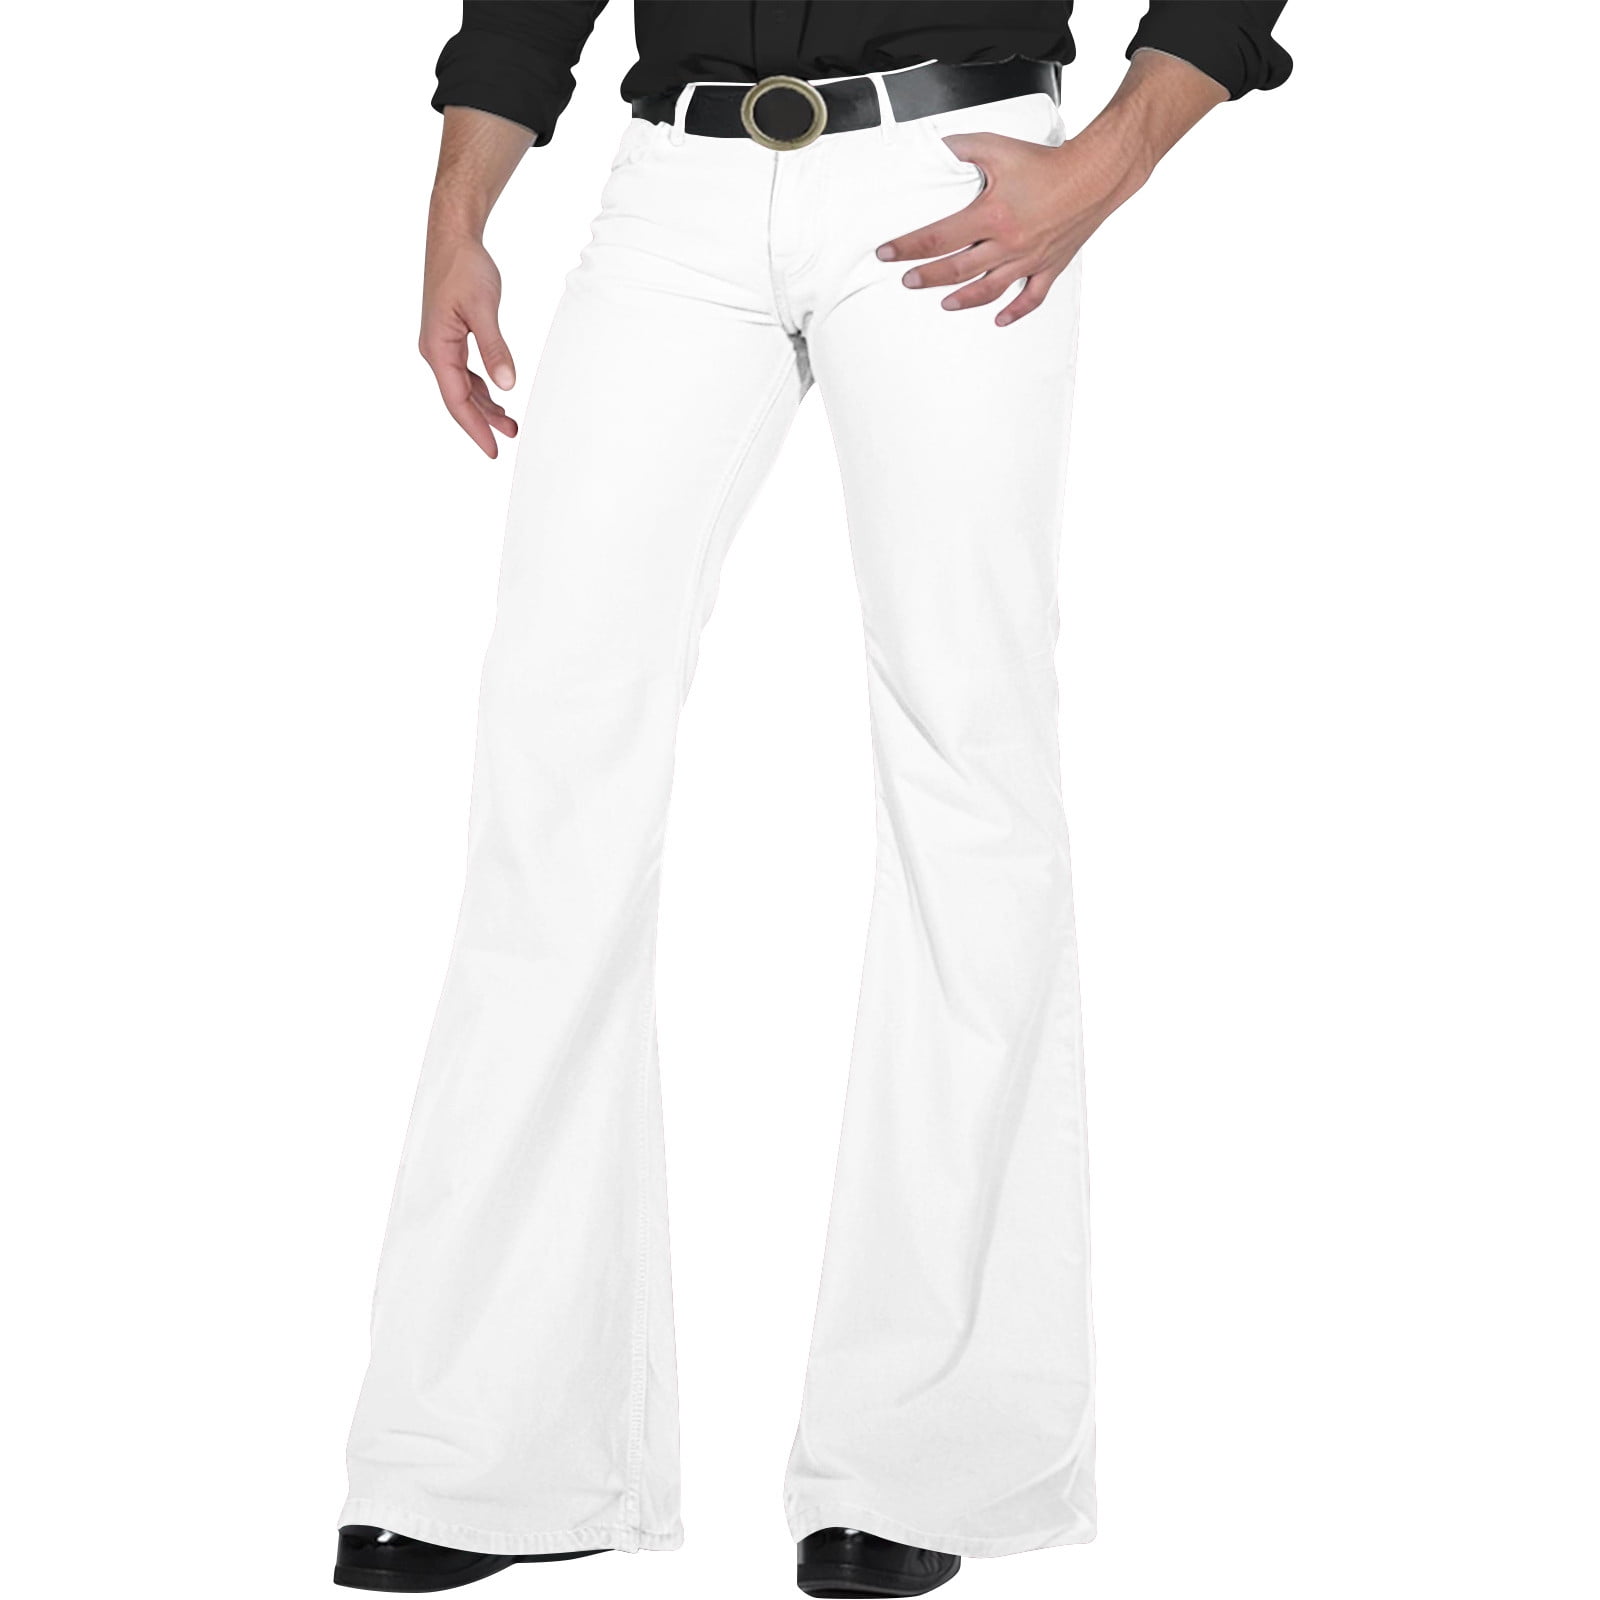 Adult Disco Flare Pants White – Sydney Costume Shop